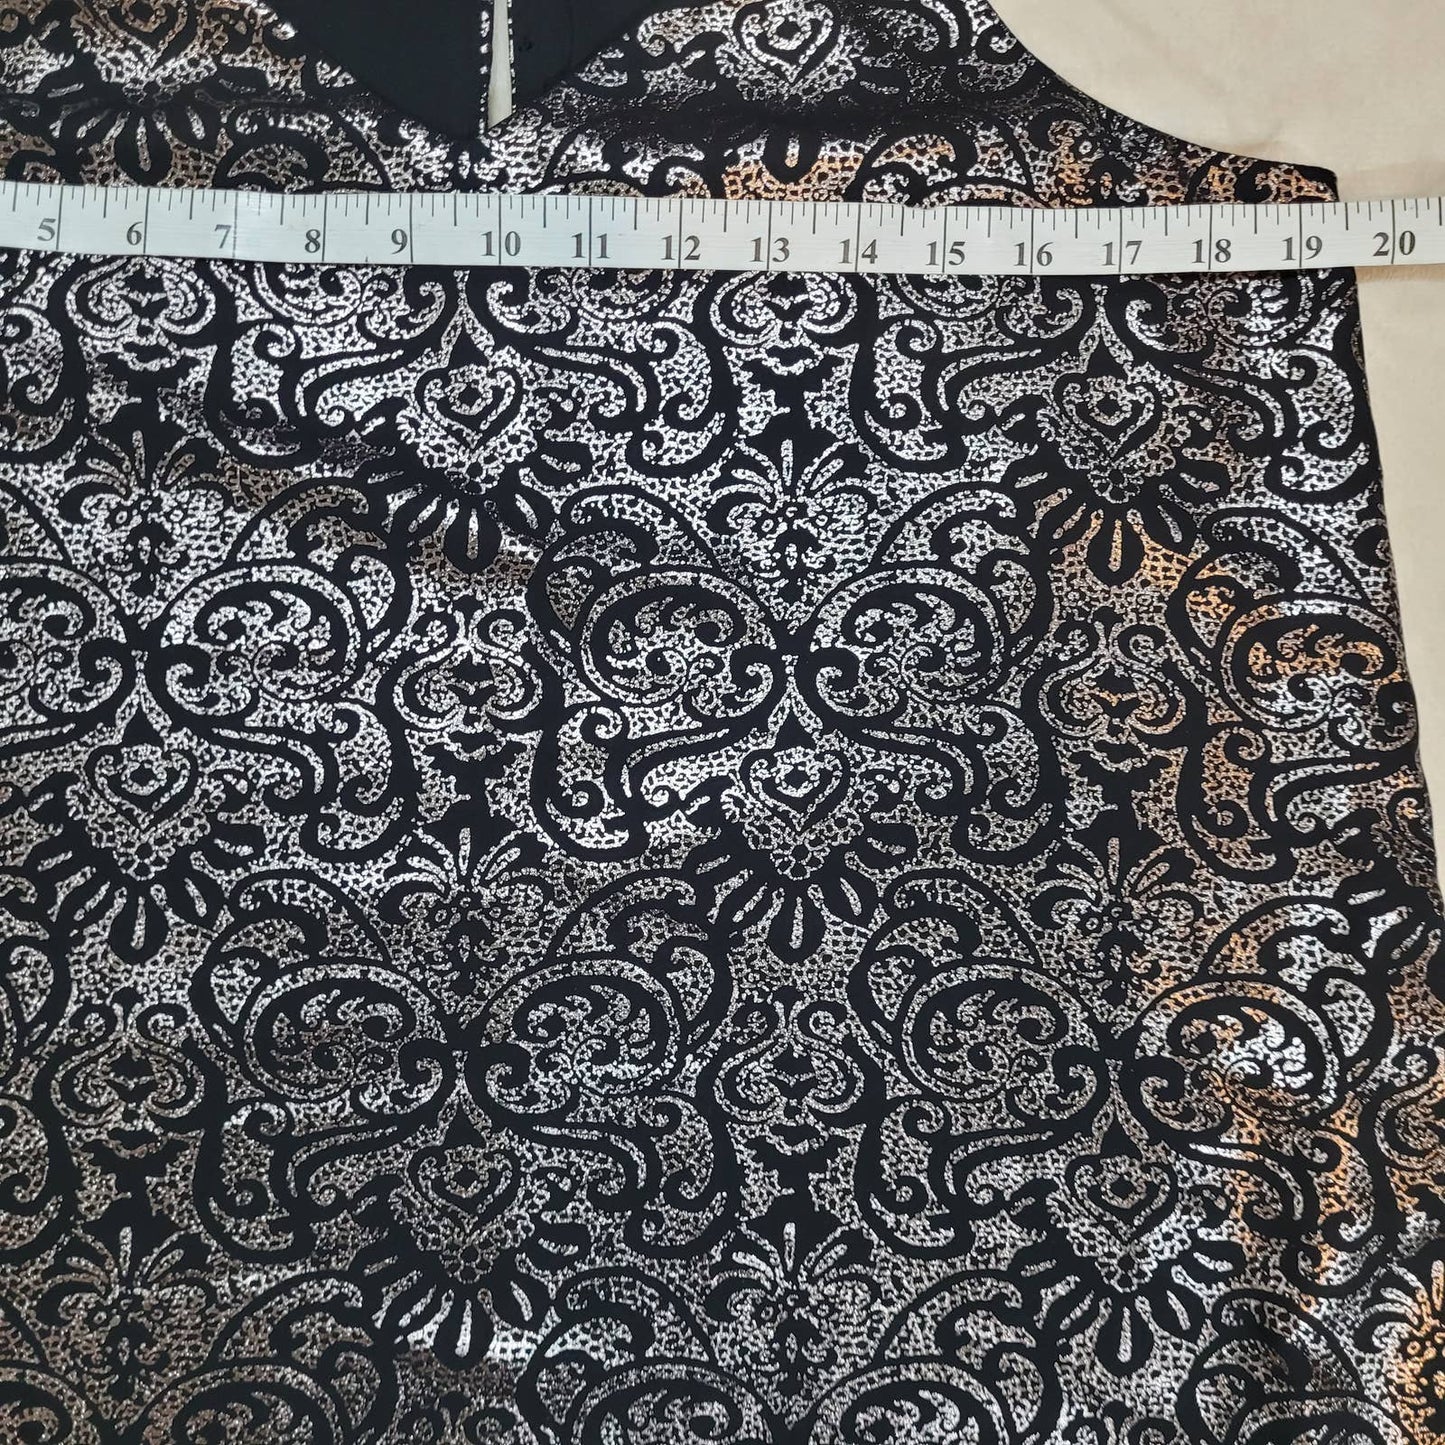 Reversible Black Racerback Blouse with Silver Filigree Design - Size MediumMarkita's ClosetUnbranded